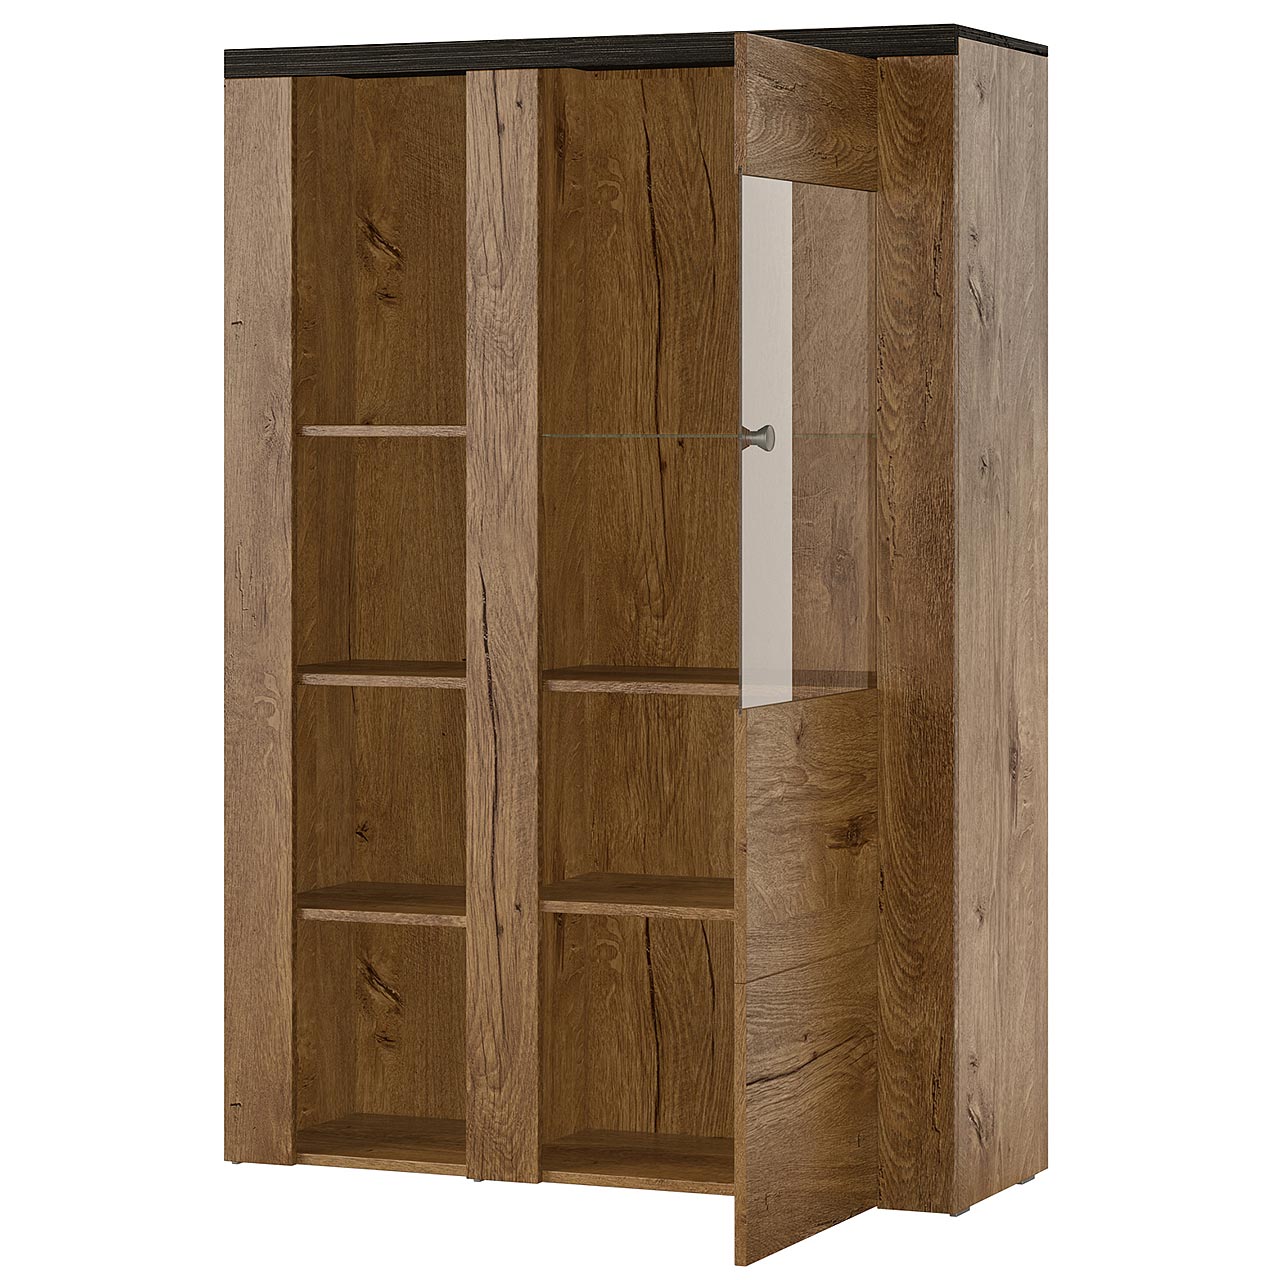 Display cabinet LARONA LO44 satin nussbaum / touchwood